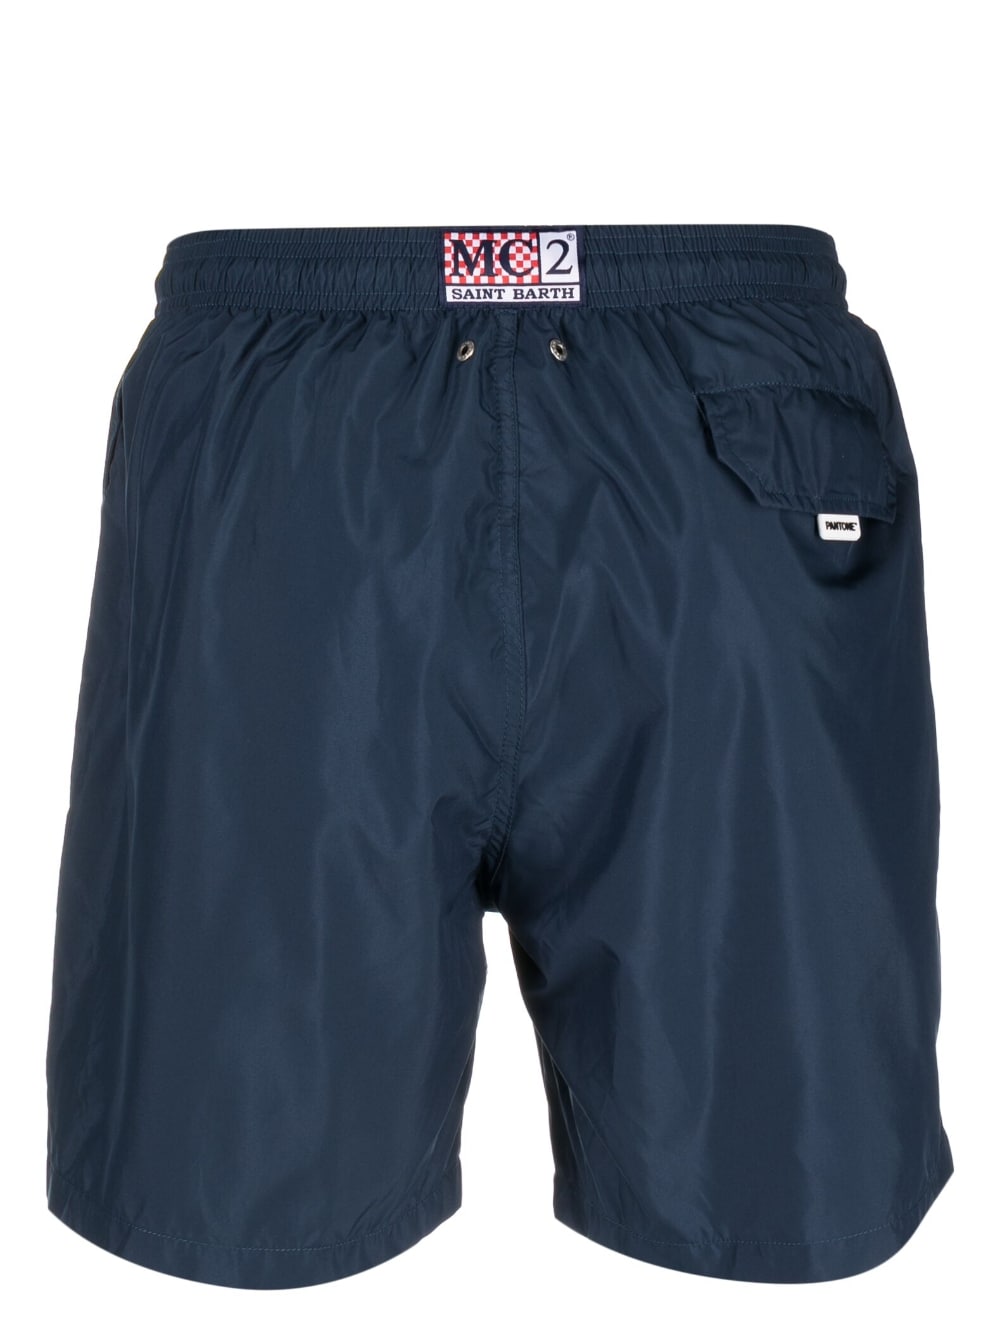 Navy blue swim shorts in ultralight fabric